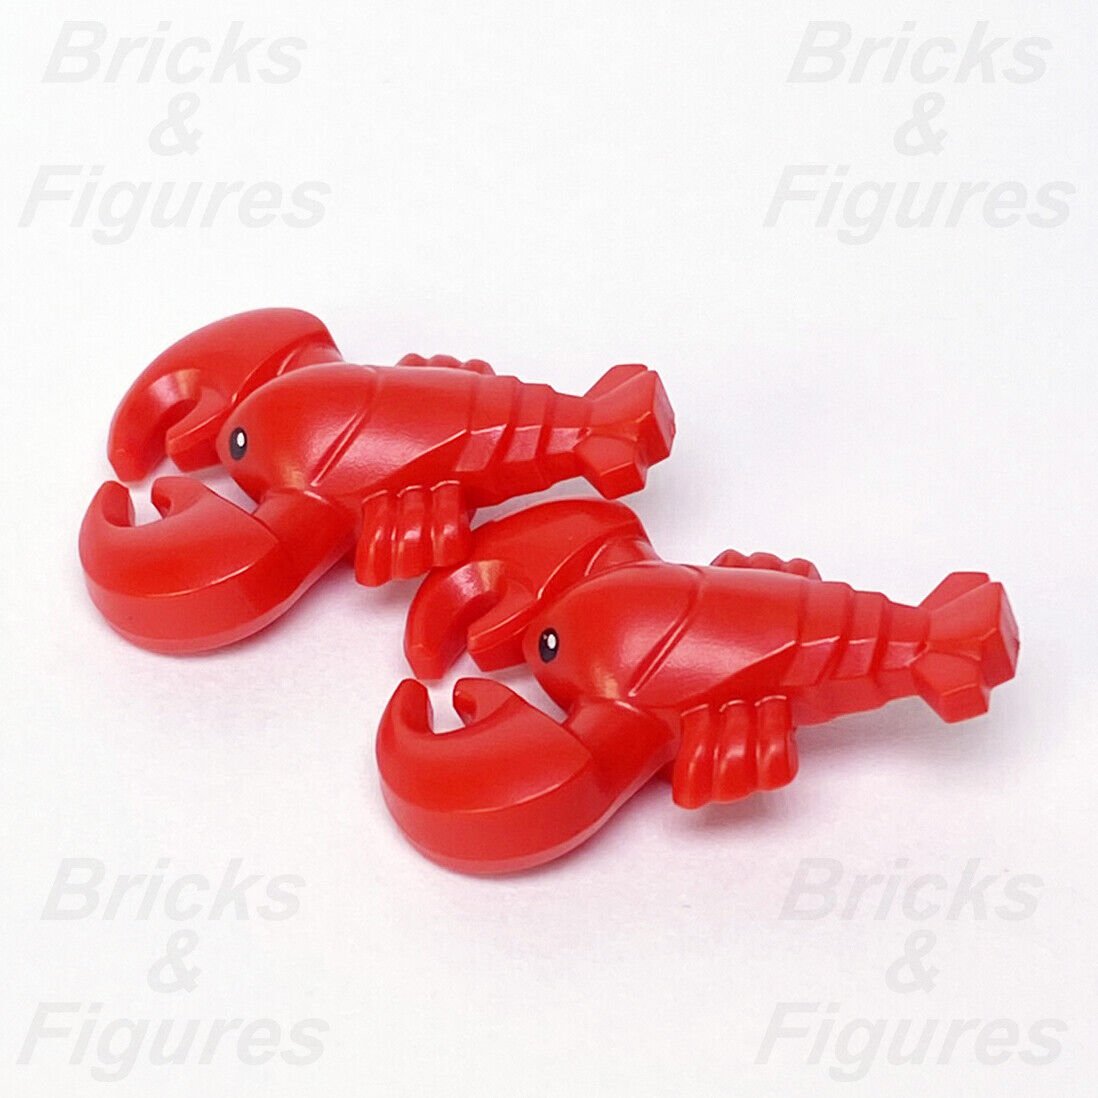 2 x LEGO Lobster Red Animal Minifigure City Town Animal Part 27152pb01 21310 - Bricks & Figures